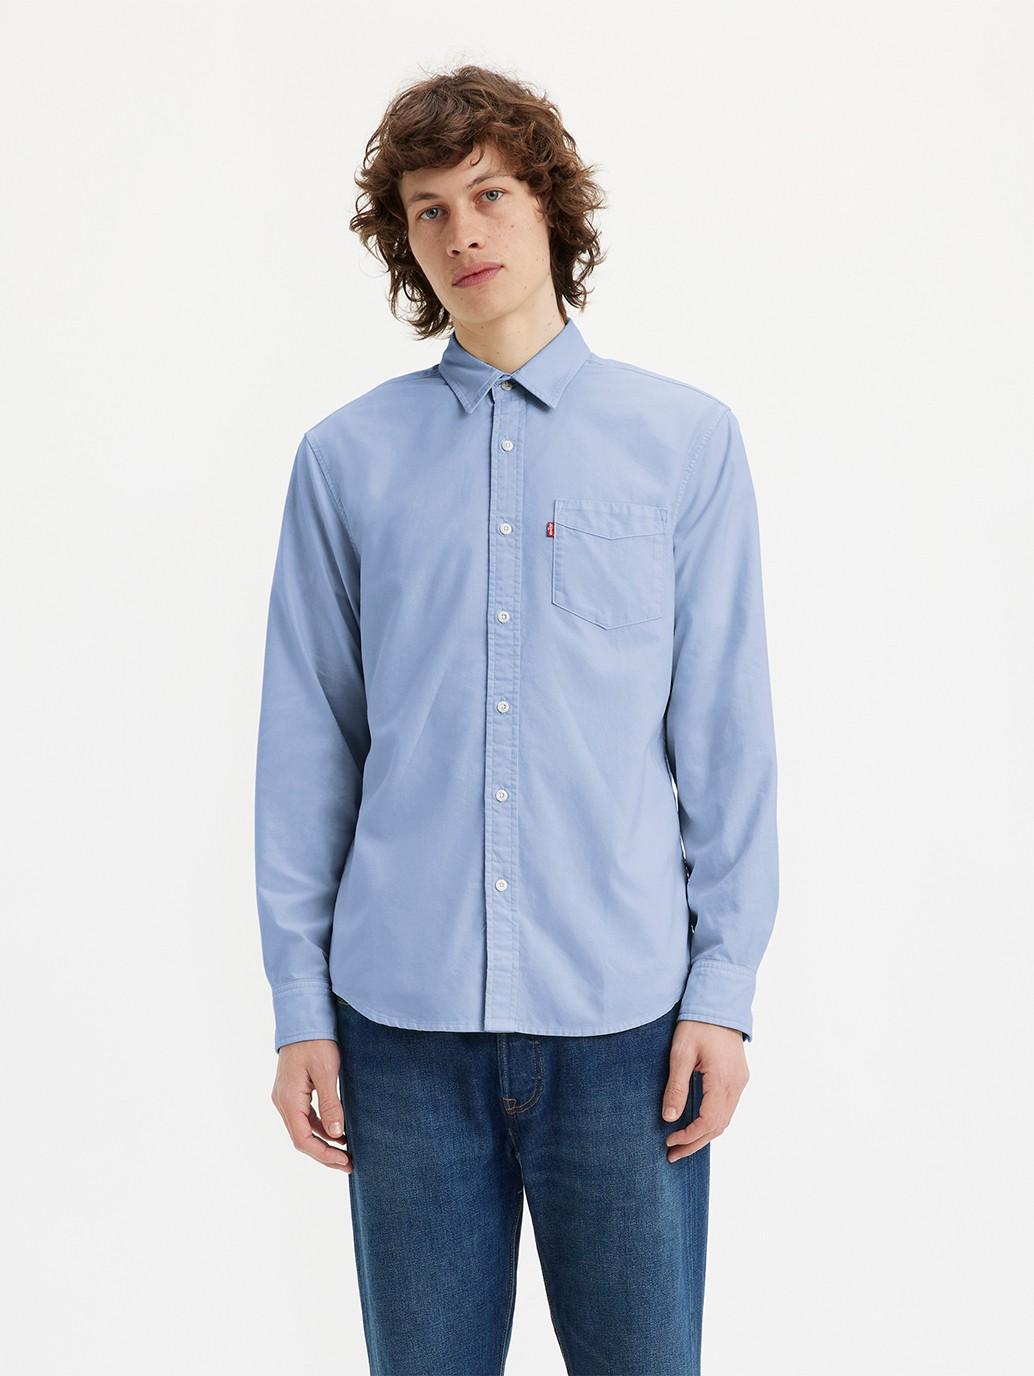 Buy Levi's® Men's Sunset Pocket Standard Fit Shirt| Levi’s® Official ...